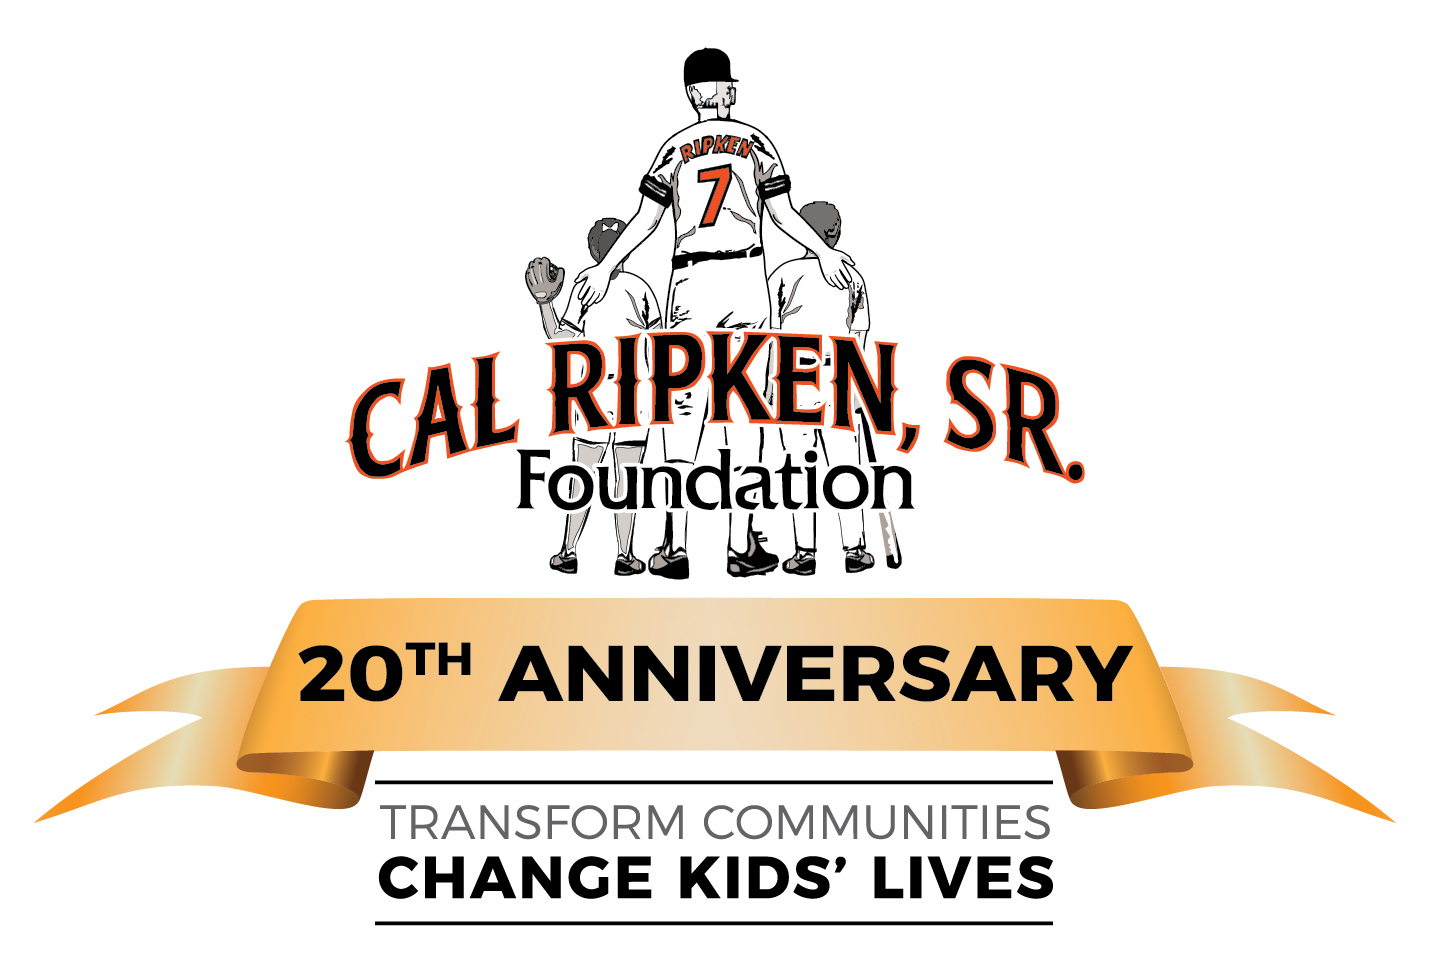 Cal Ripken, Sr. Foundation Celebrates 20th Anniversary